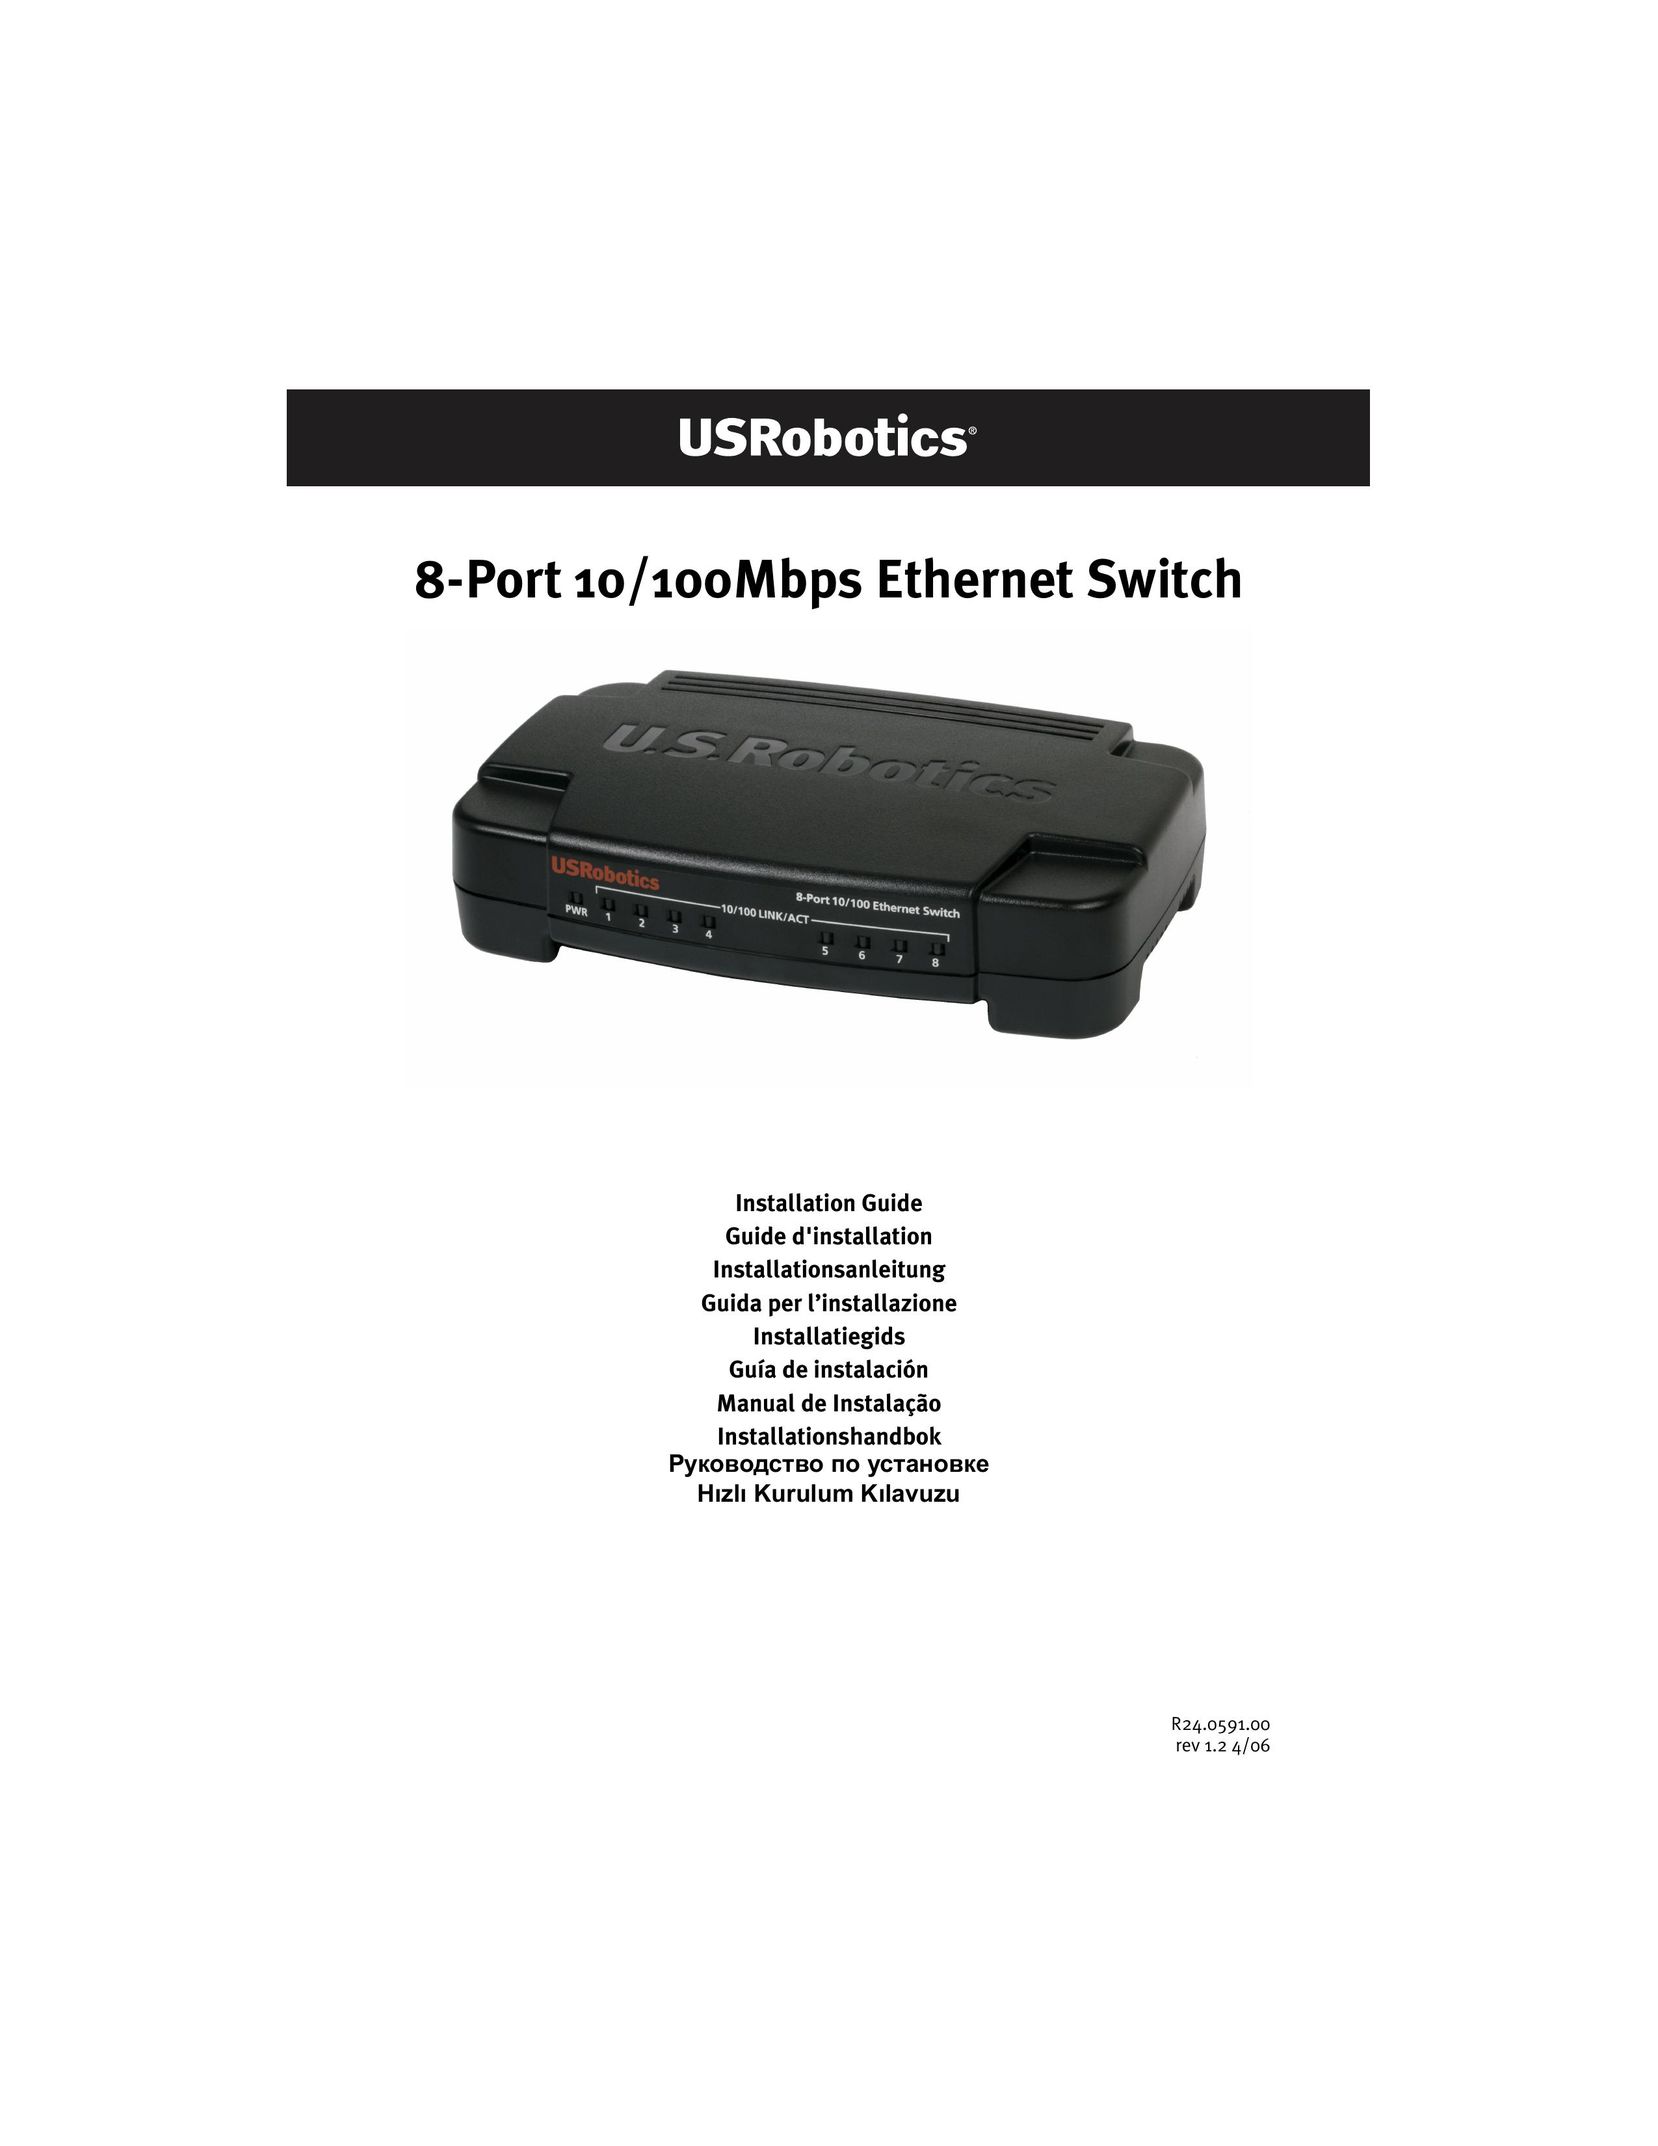 USRobotics 7908A Switch User Manual